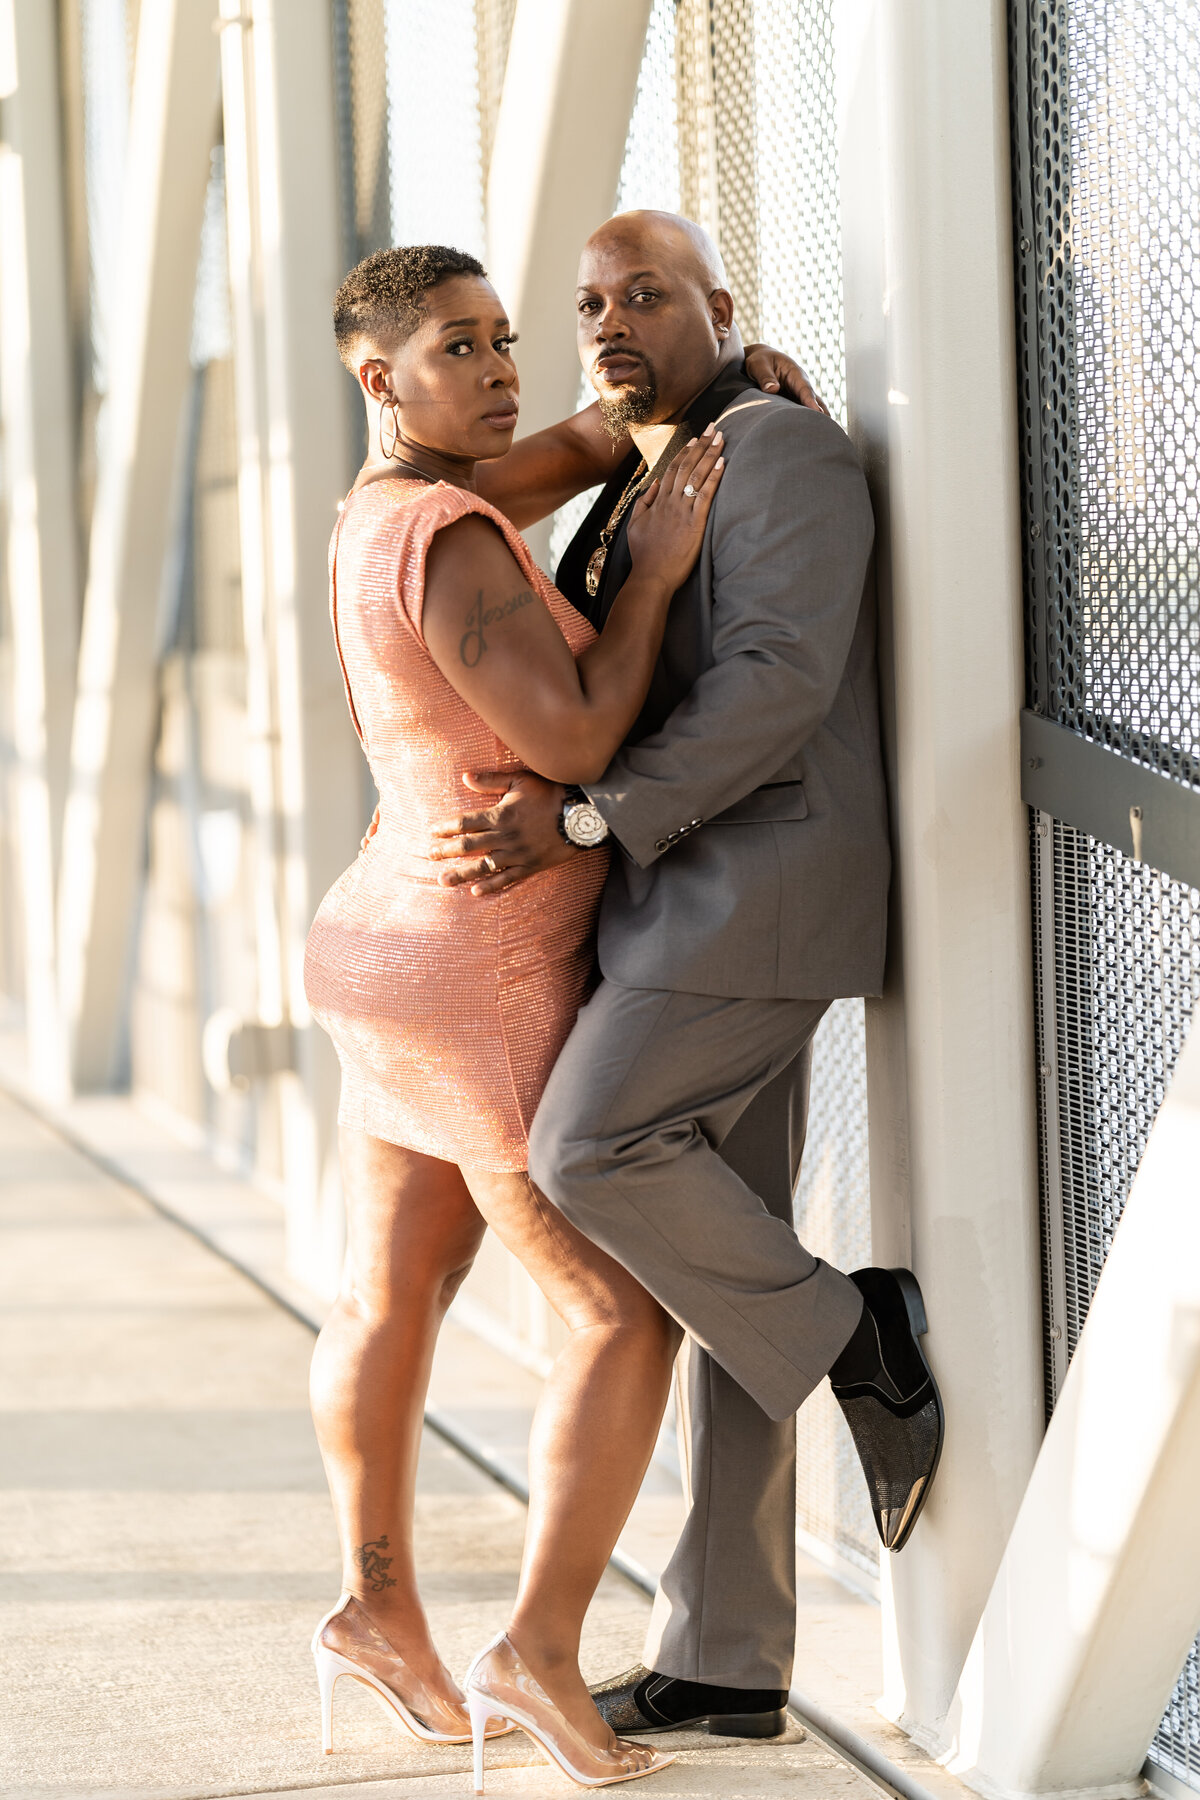 Wedding anniversary photoshoot couple on bridge man wearing grey suit, woman wearing coral sequin dress